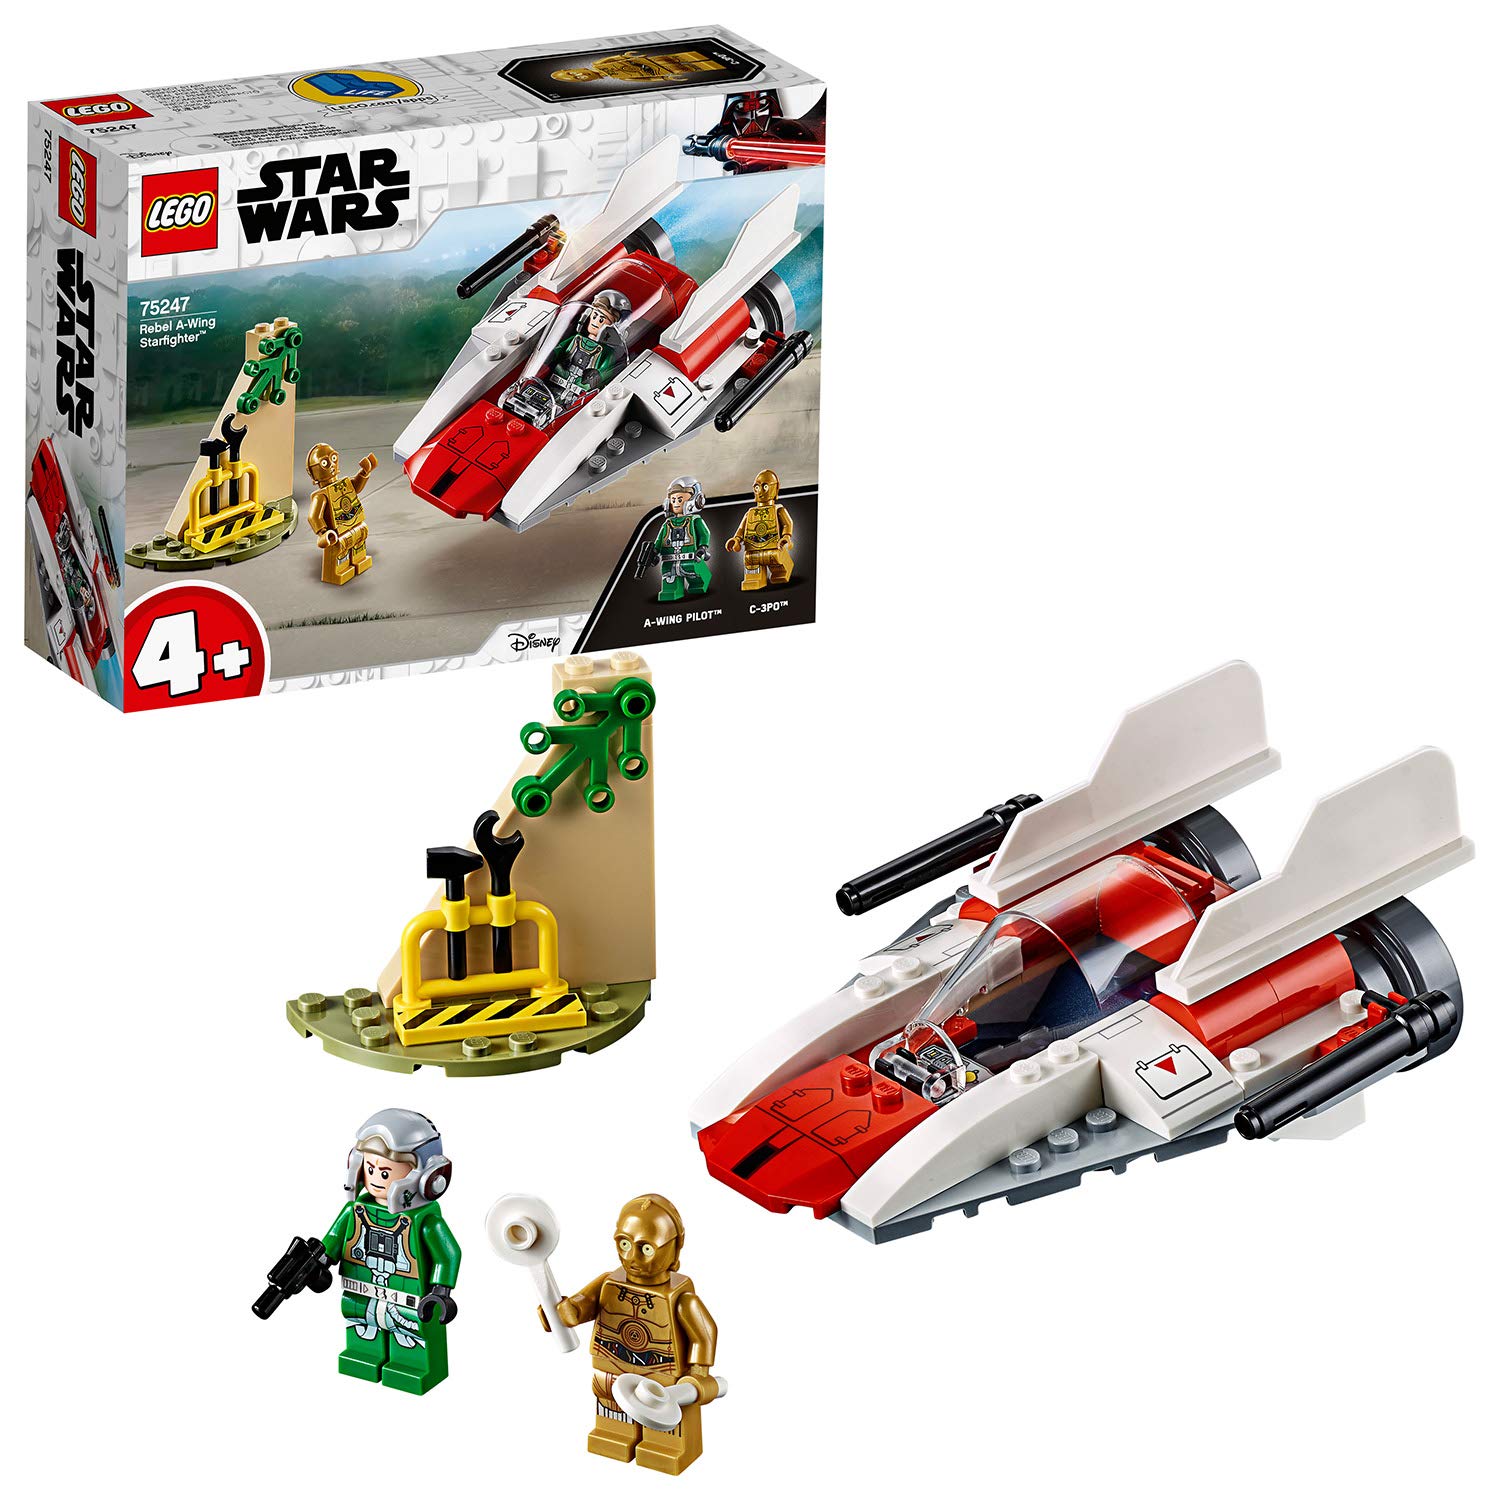 Lego Star Wars 75247 Rebel A-Wing Starfighter